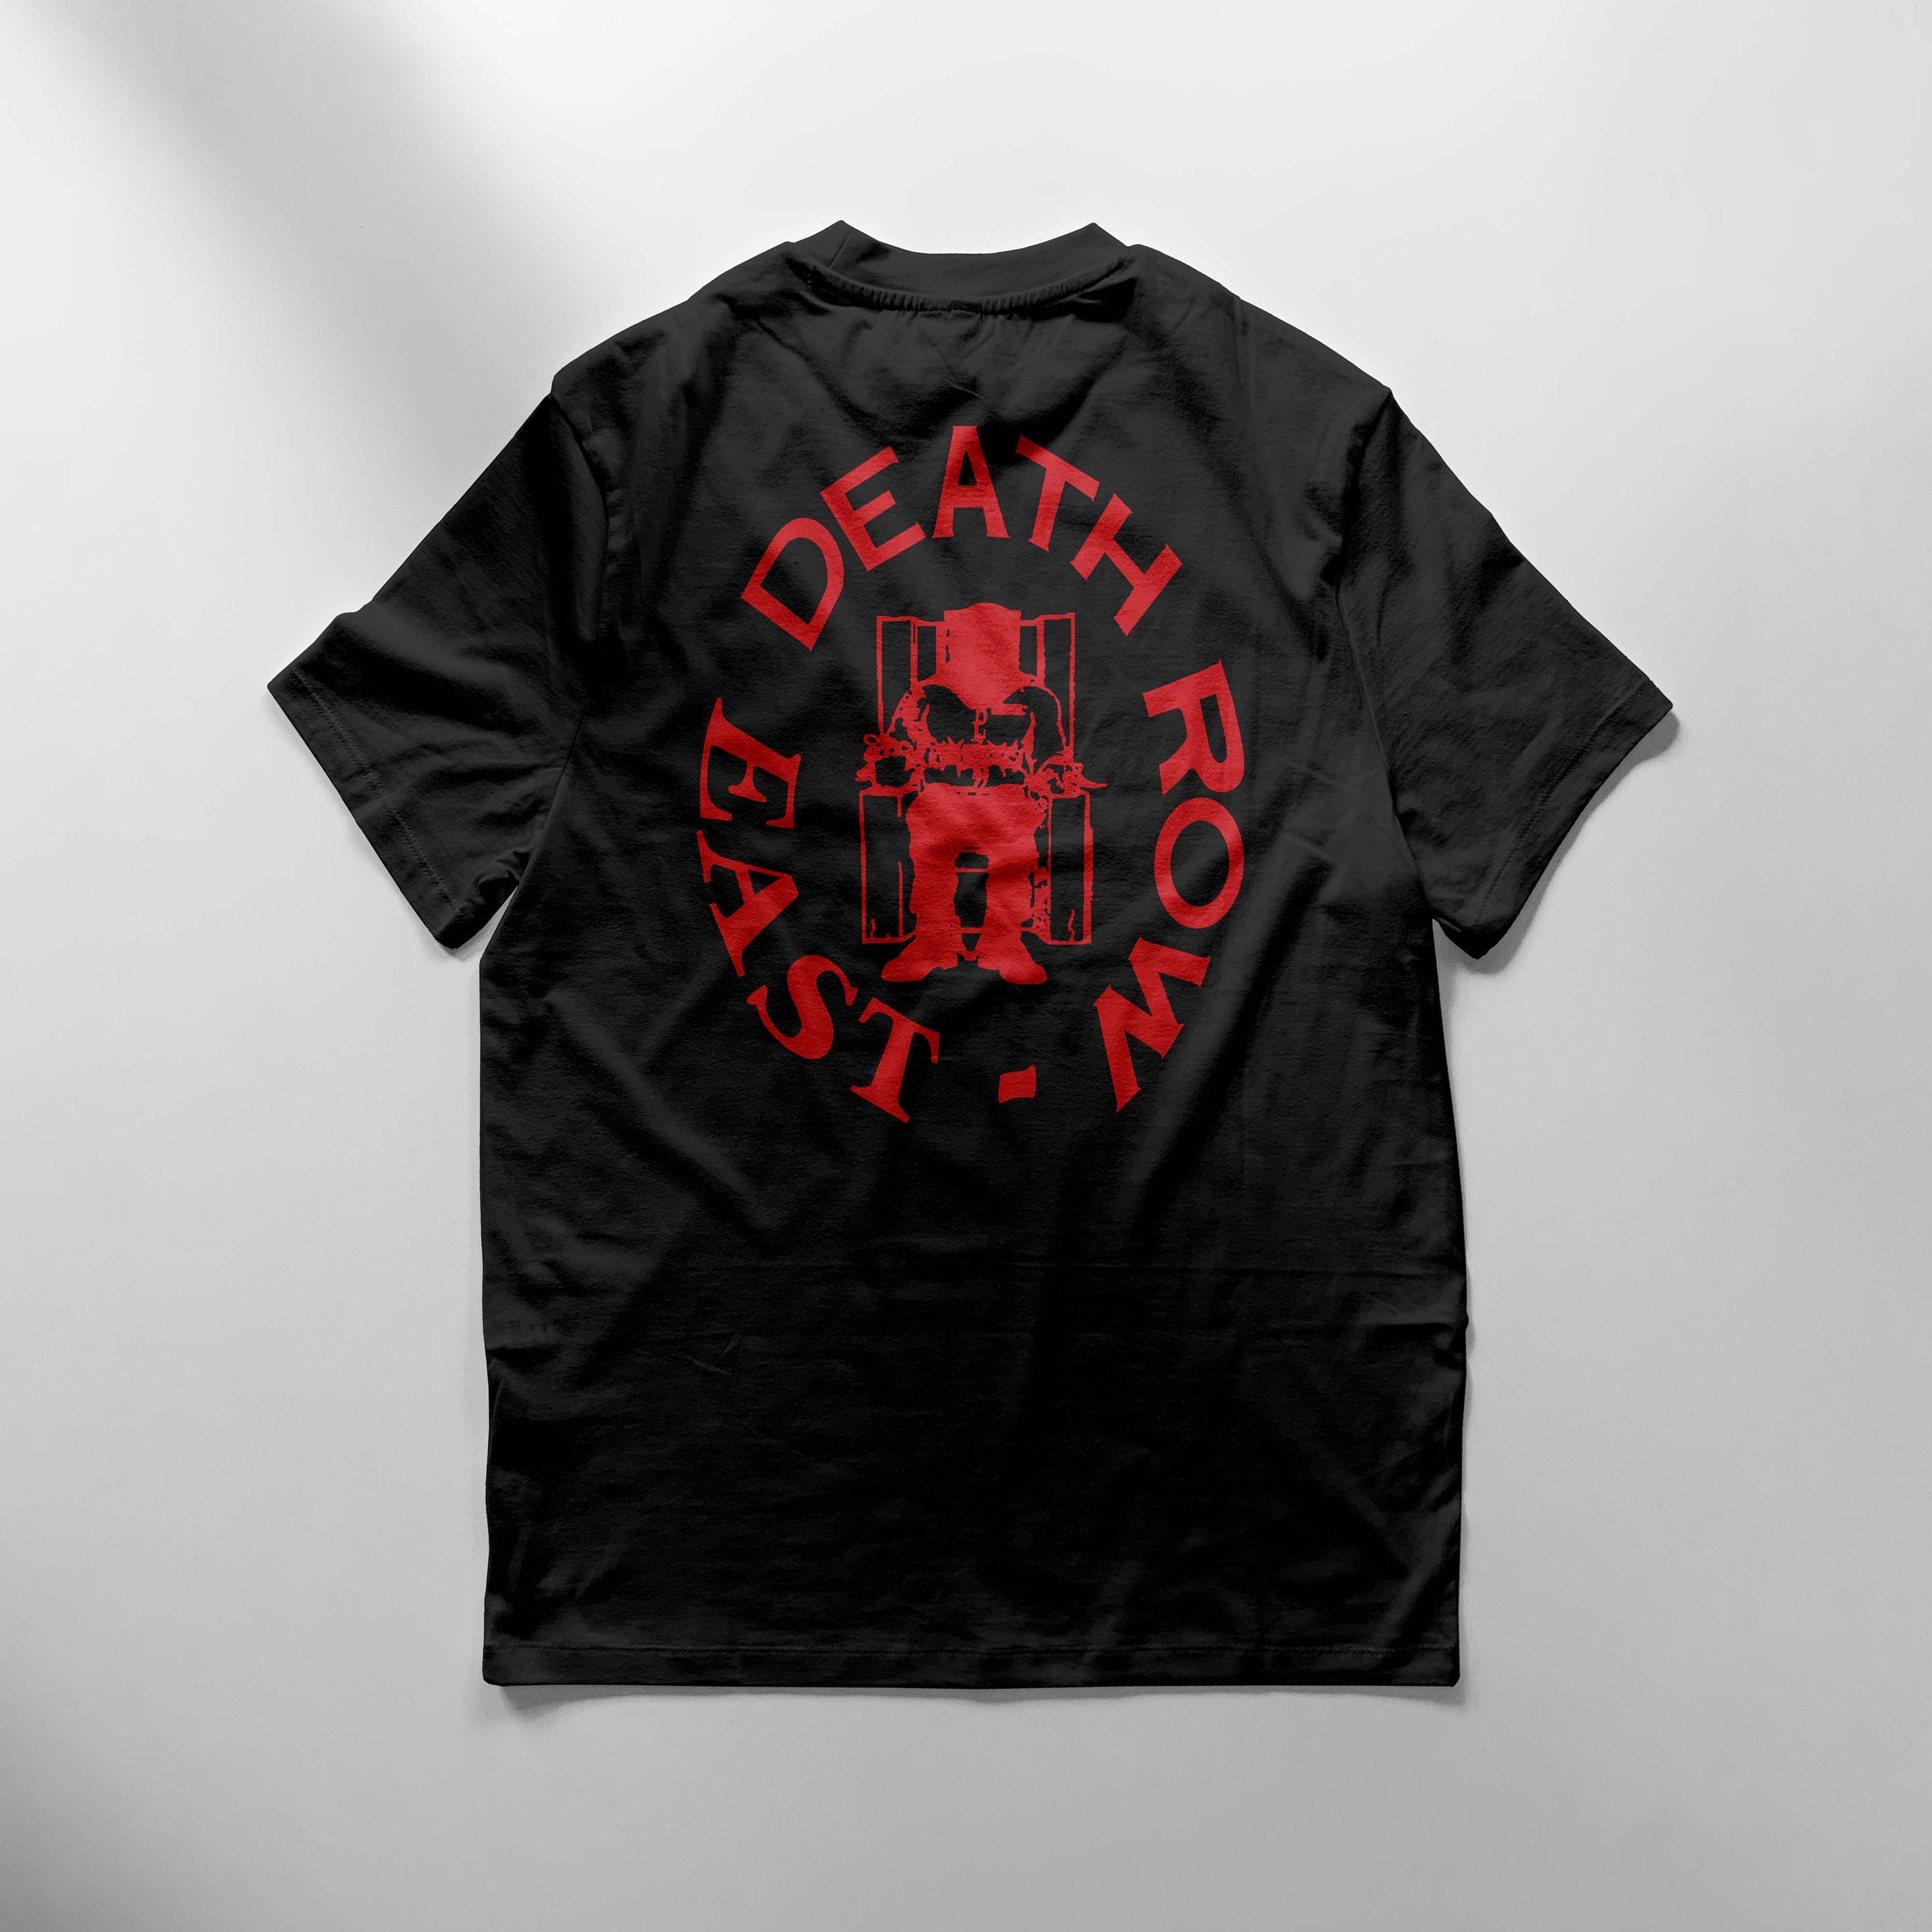 Death row t shirt - Etsy 日本